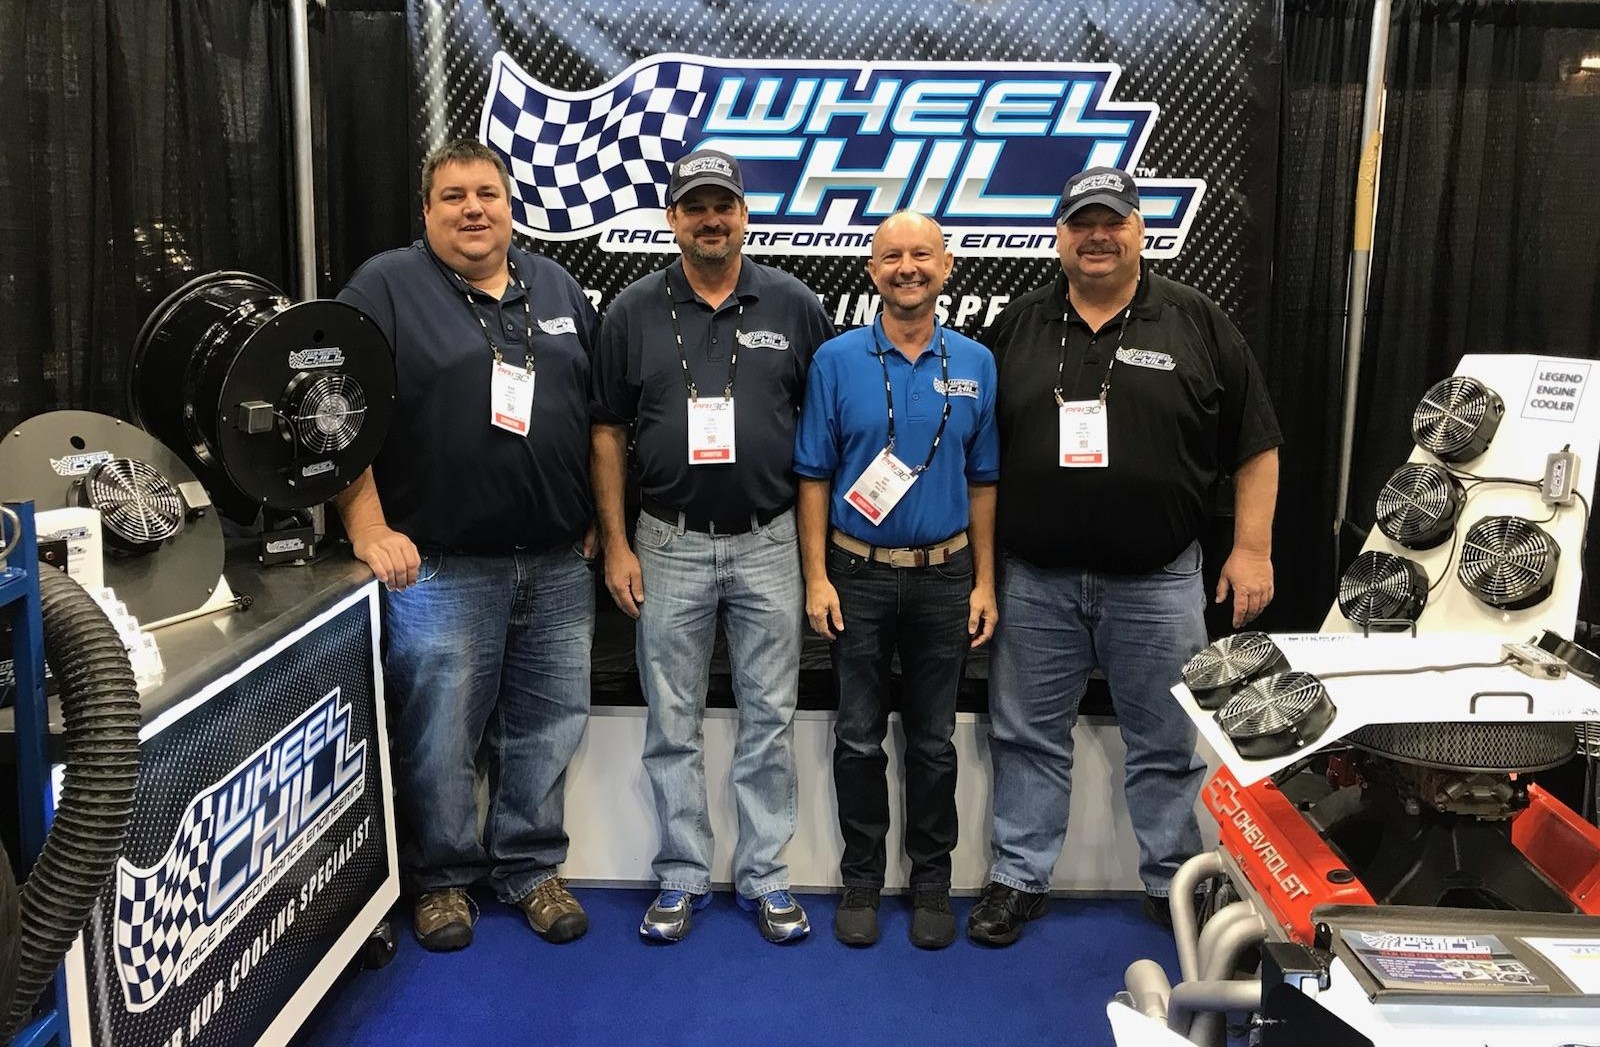 The Wheel Chill team at their PRI 2018 display